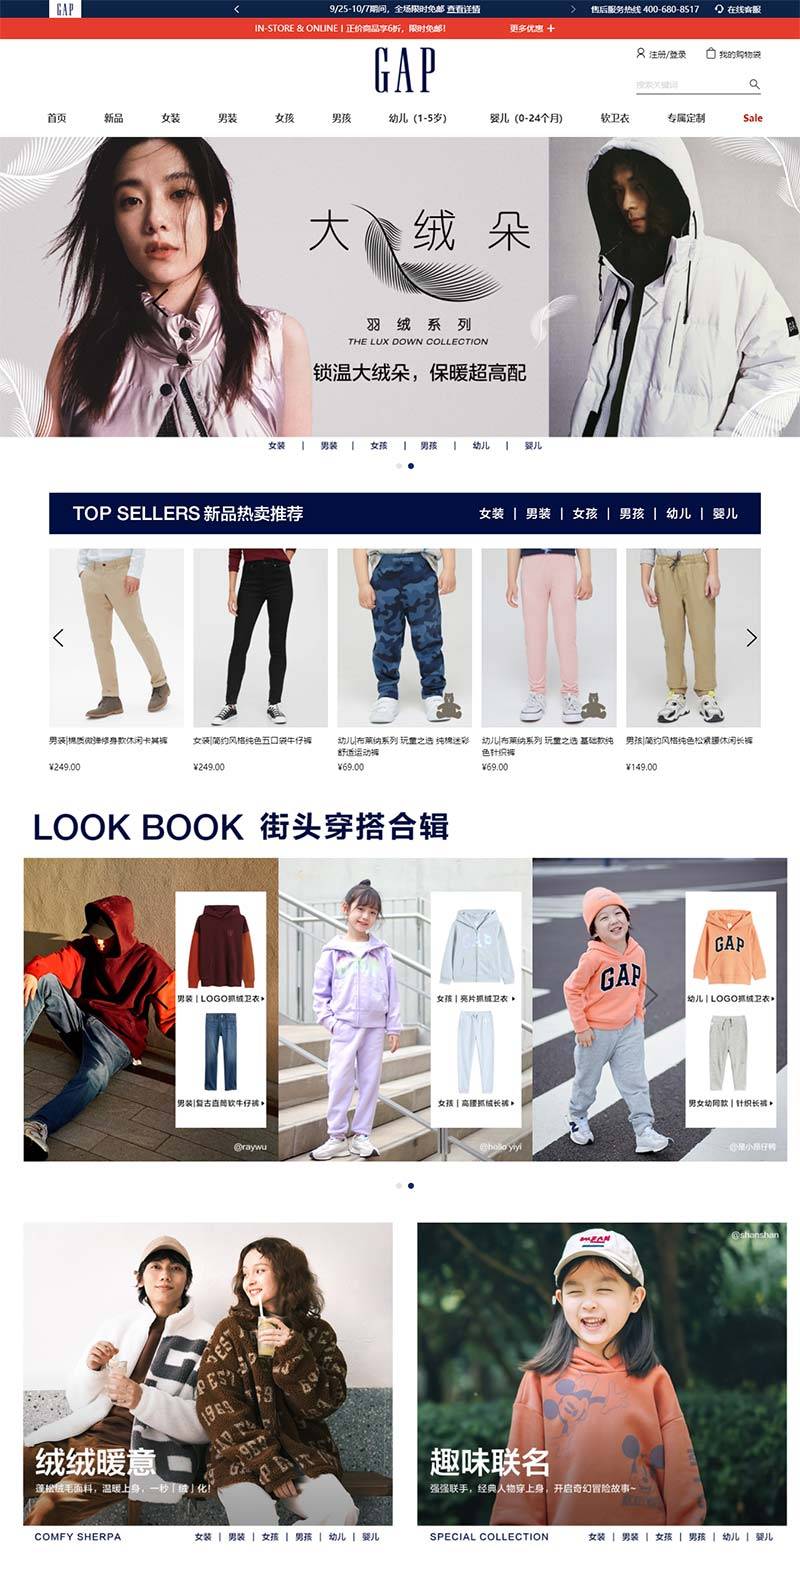 GAP CN 美国休闲服饰品牌中文网站